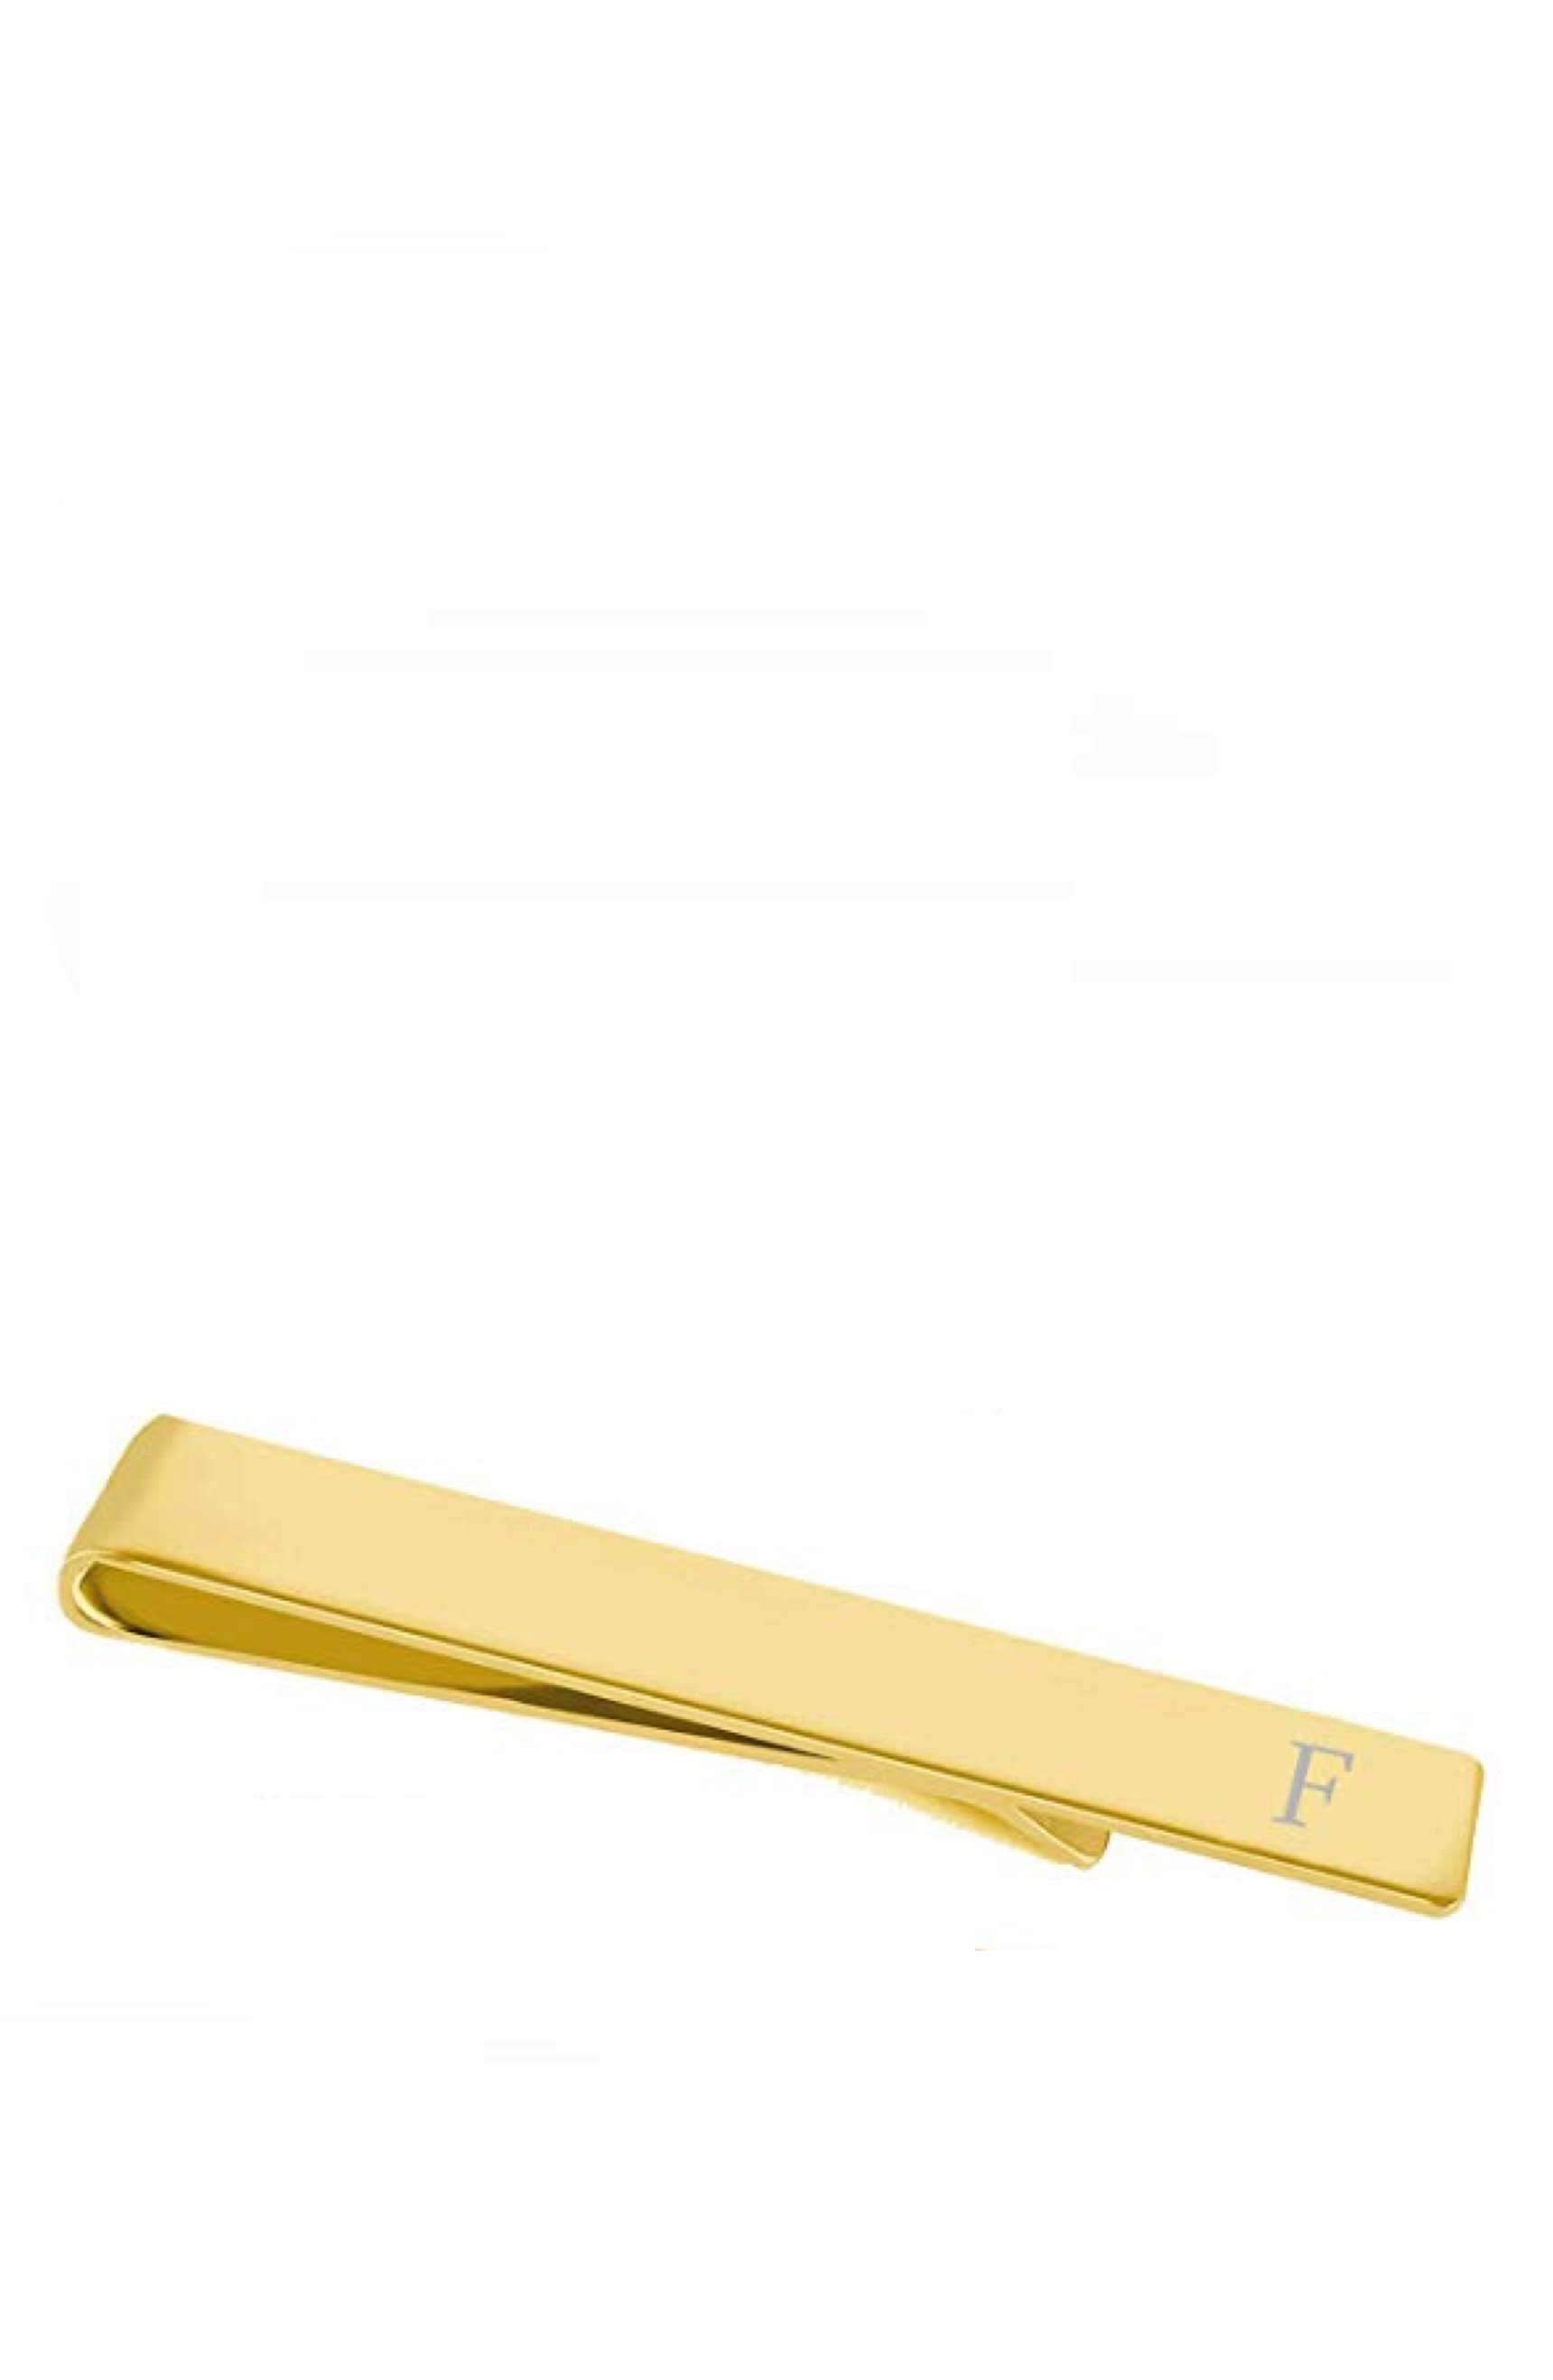 18K Gold Initial "F" Tie Bar